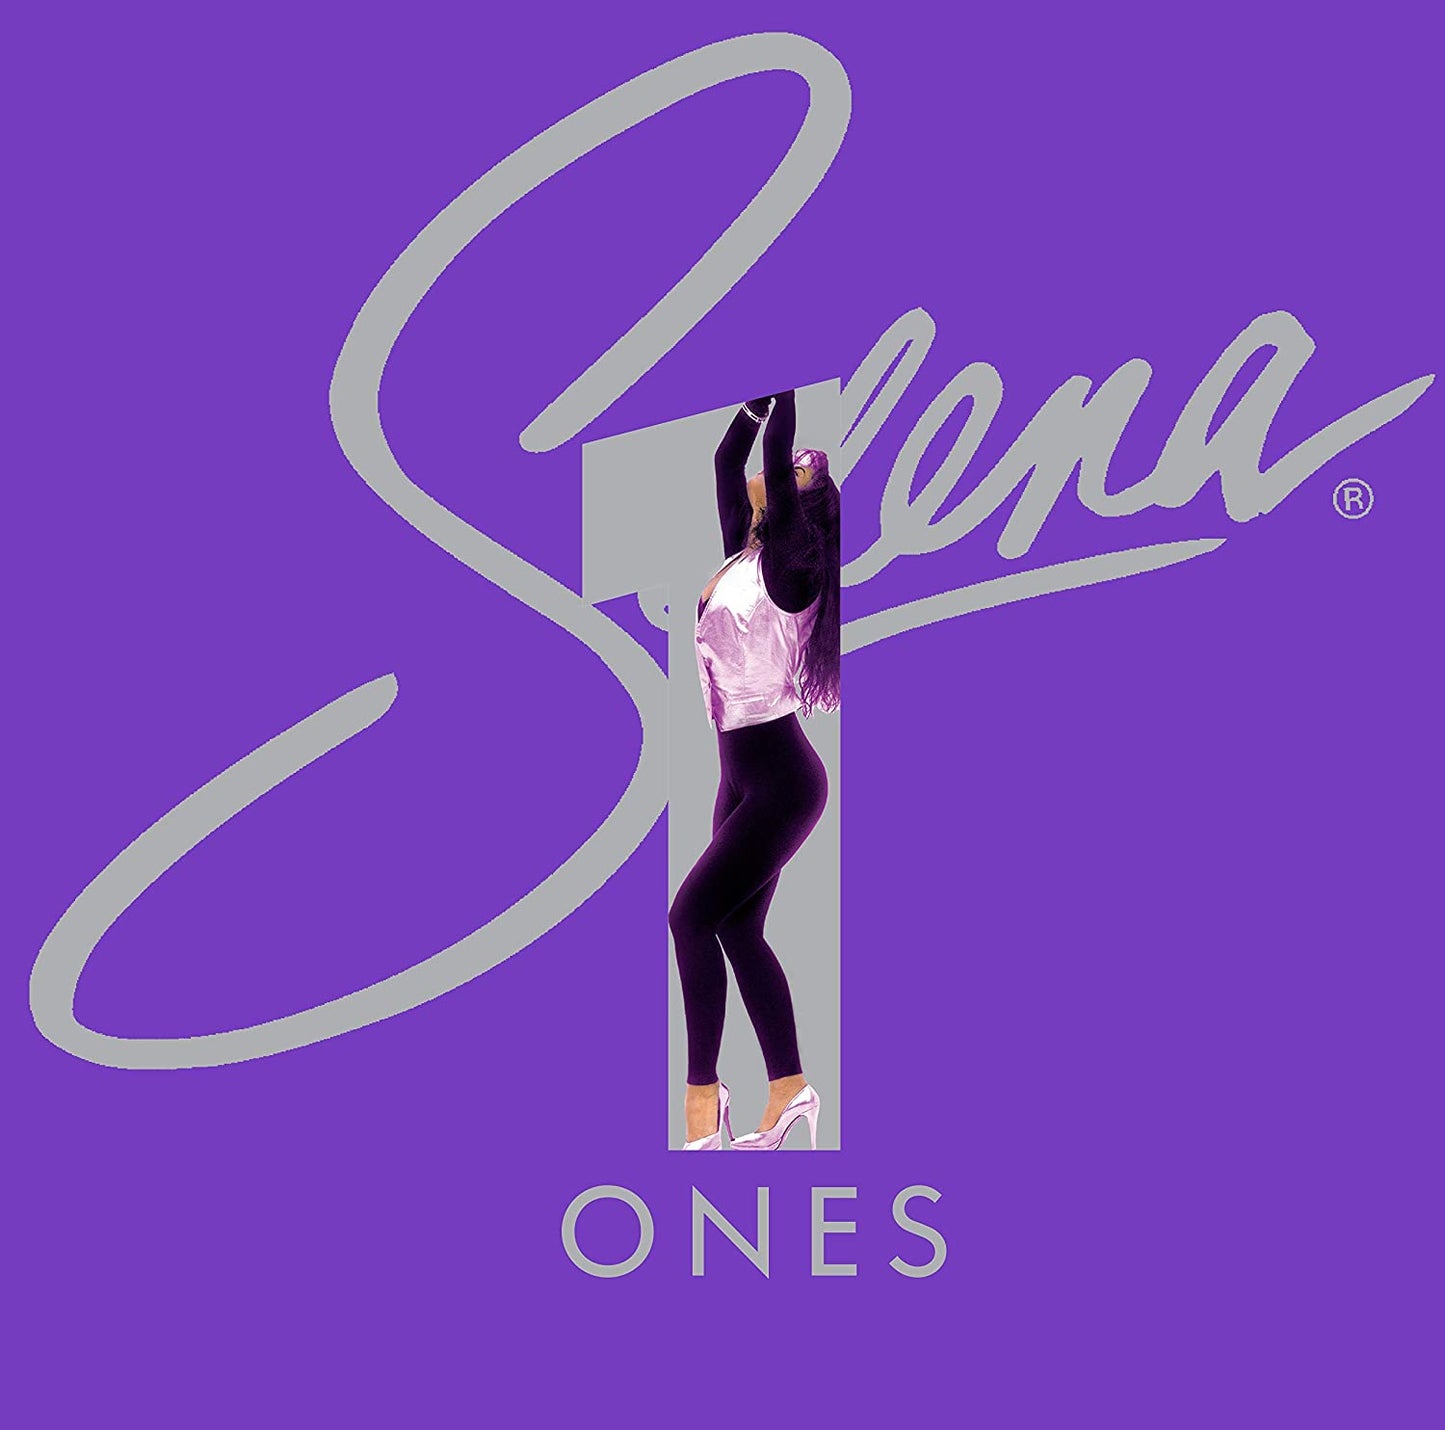 Ones - Selena Vinyl